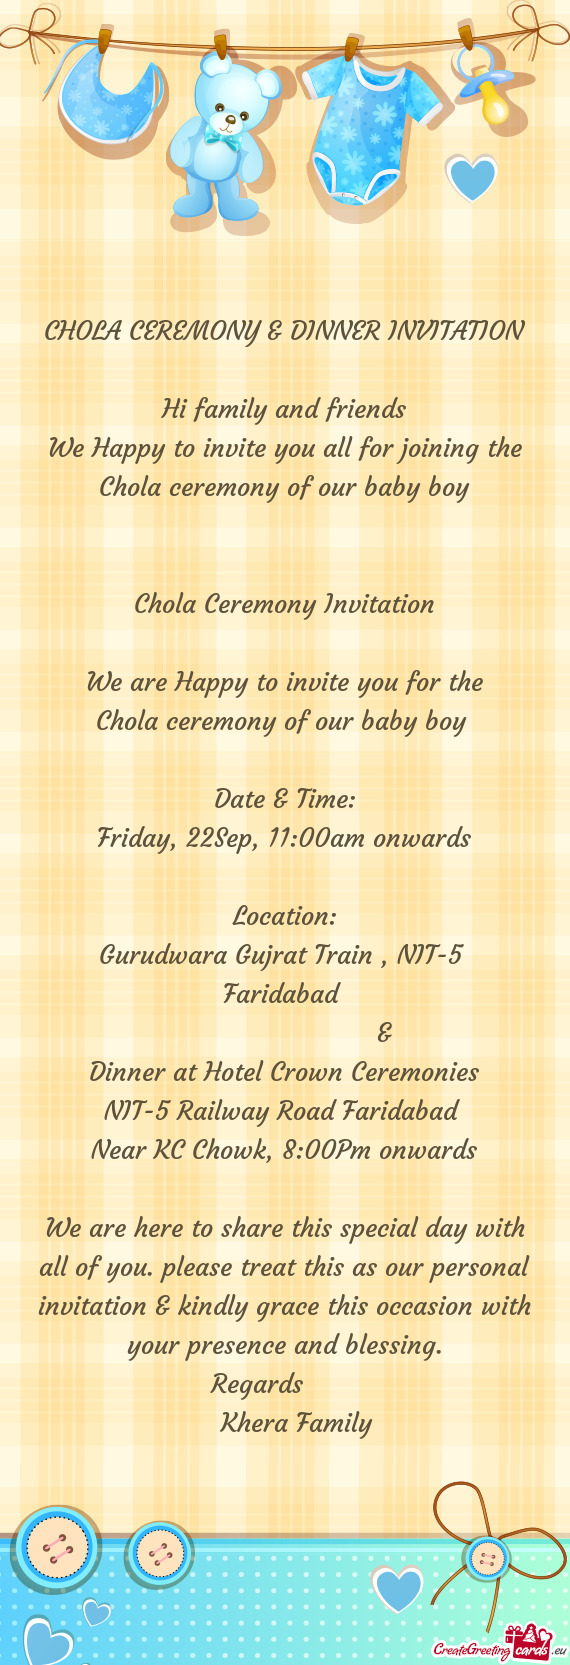 CHOLA CEREMONY & DINNER INVITATION